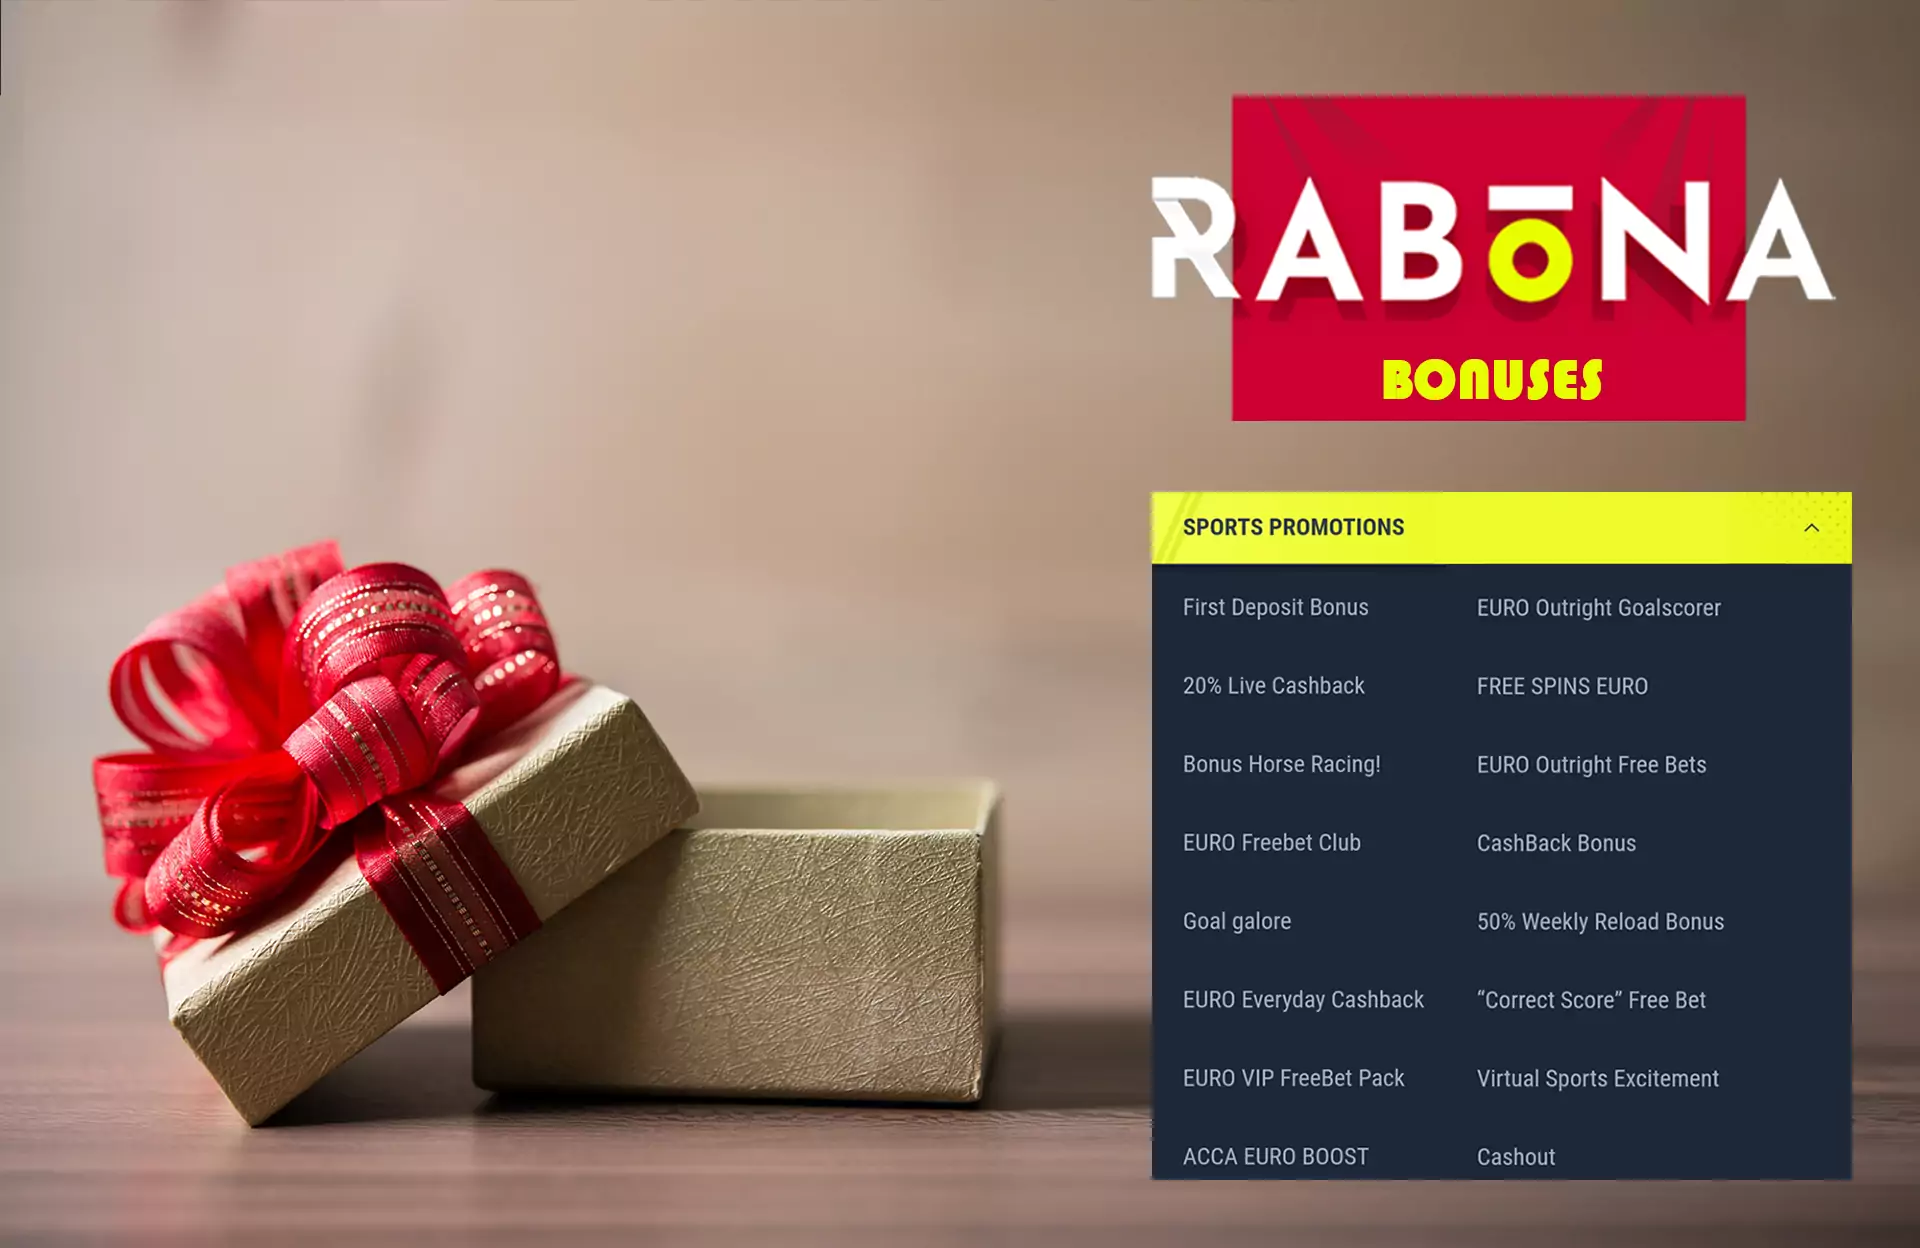 Rabona offers sports and casino bonuses.